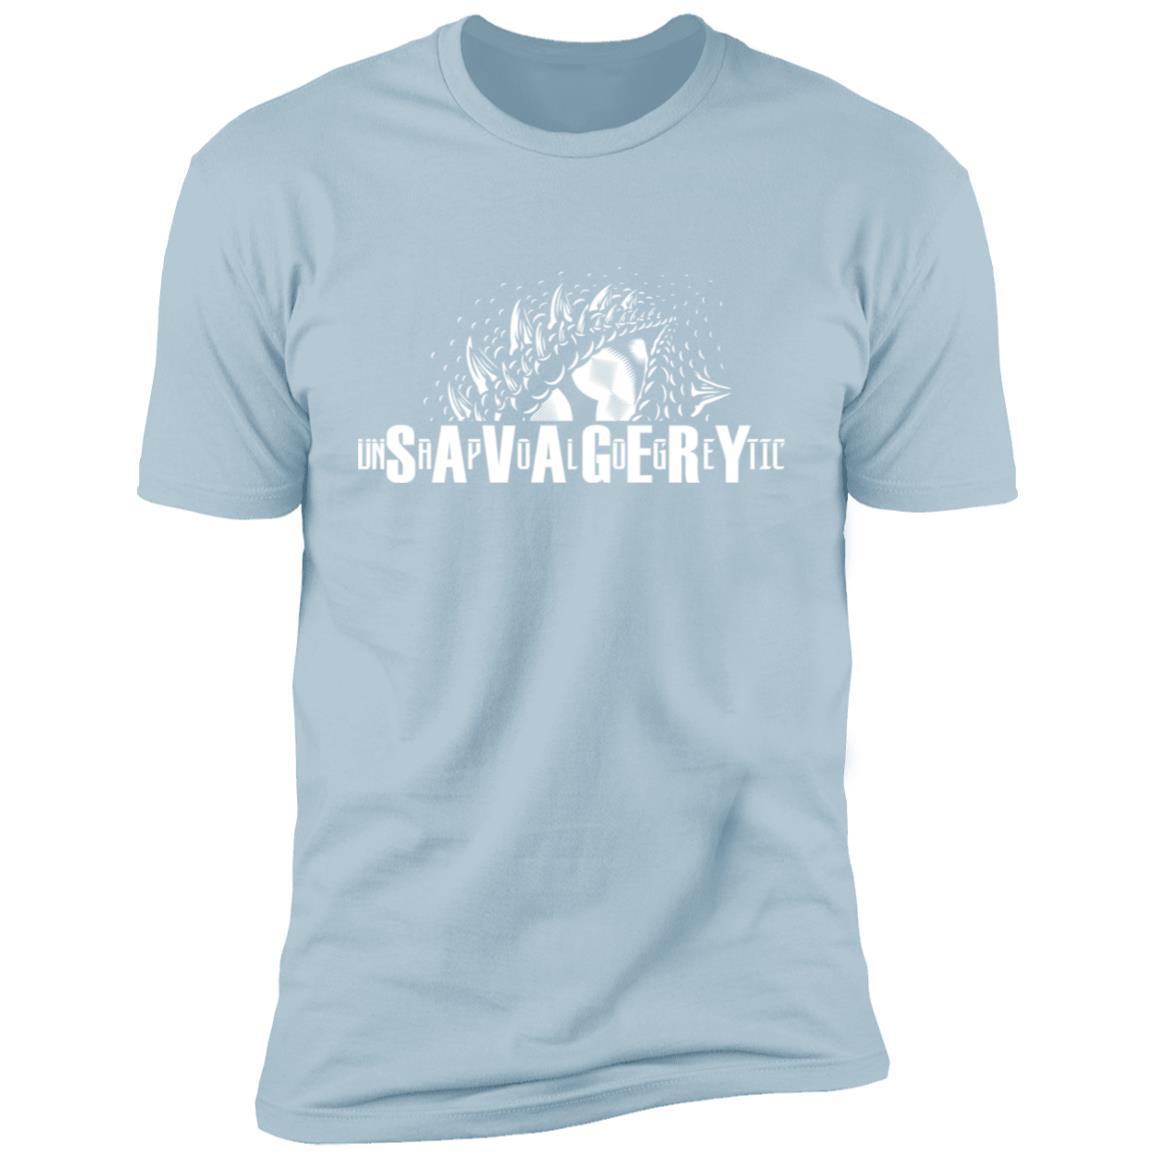 Unapologetic Savagery Premium Short Sleeve T-Shirt CustomCat